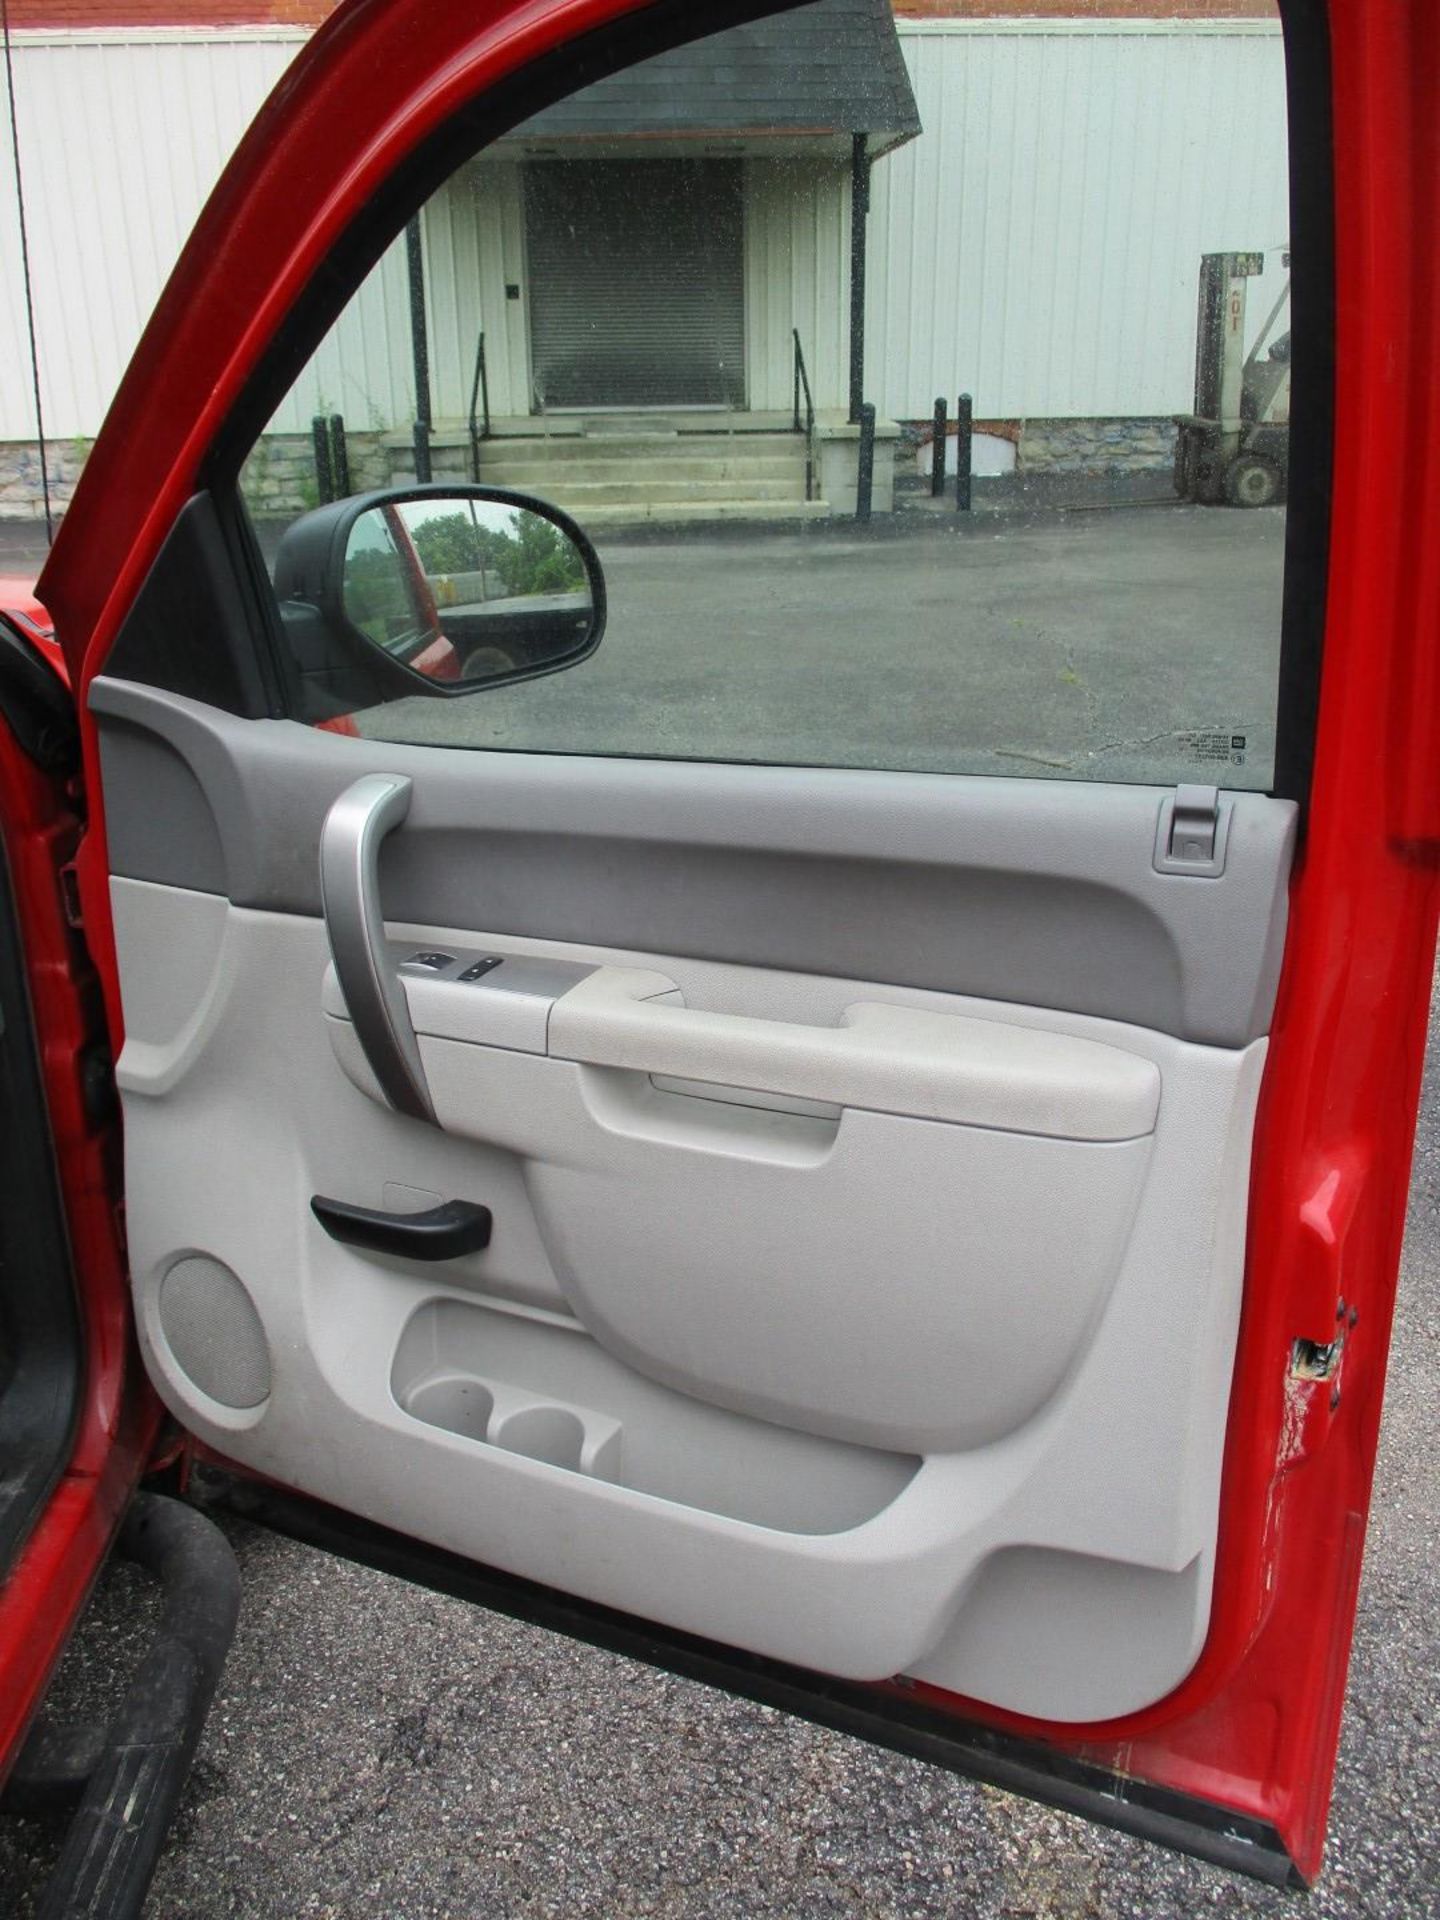 2012 GMC Sierra 1500 Pickup, VIN 1GTN1TEAXCZ138182, Regular Cab, Automatic, AC, 8' Bed, Tonneau - Image 20 of 24